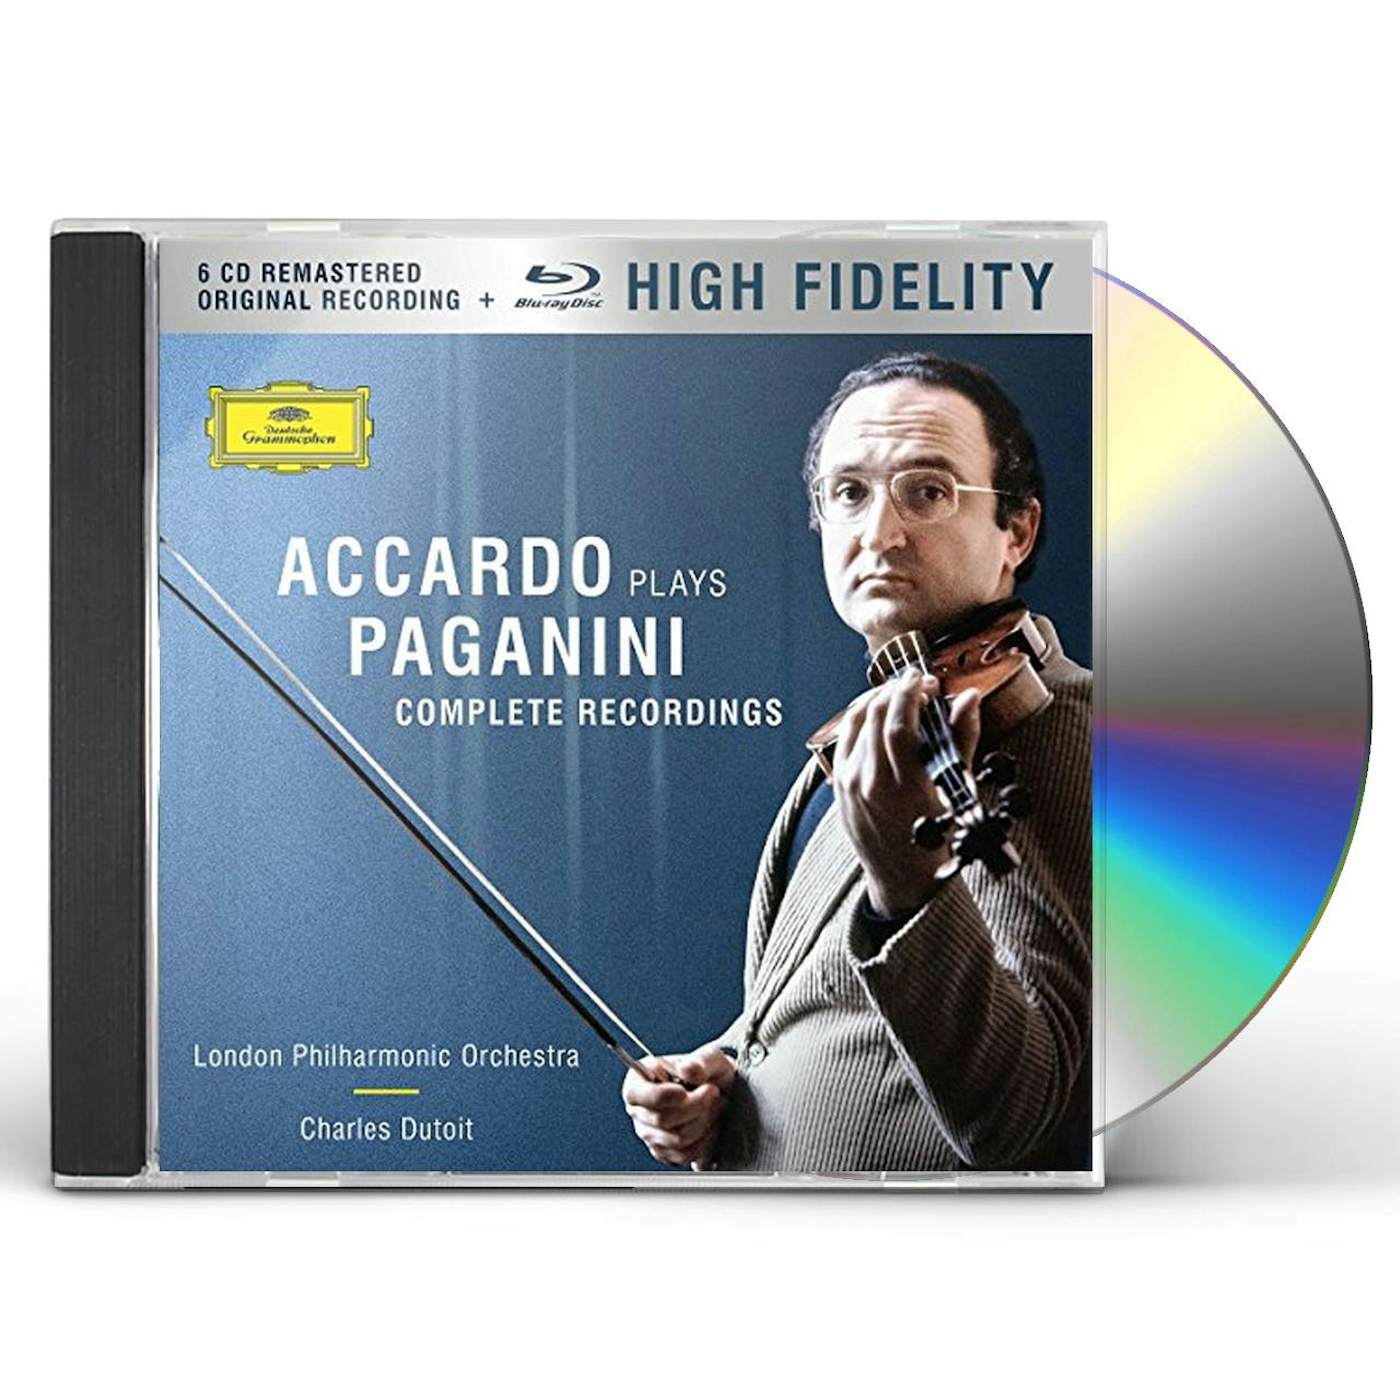 Salvatore Accardo ACCARDO PLAYS PAGANINI - THE COMPLETE RECORDINGS CD